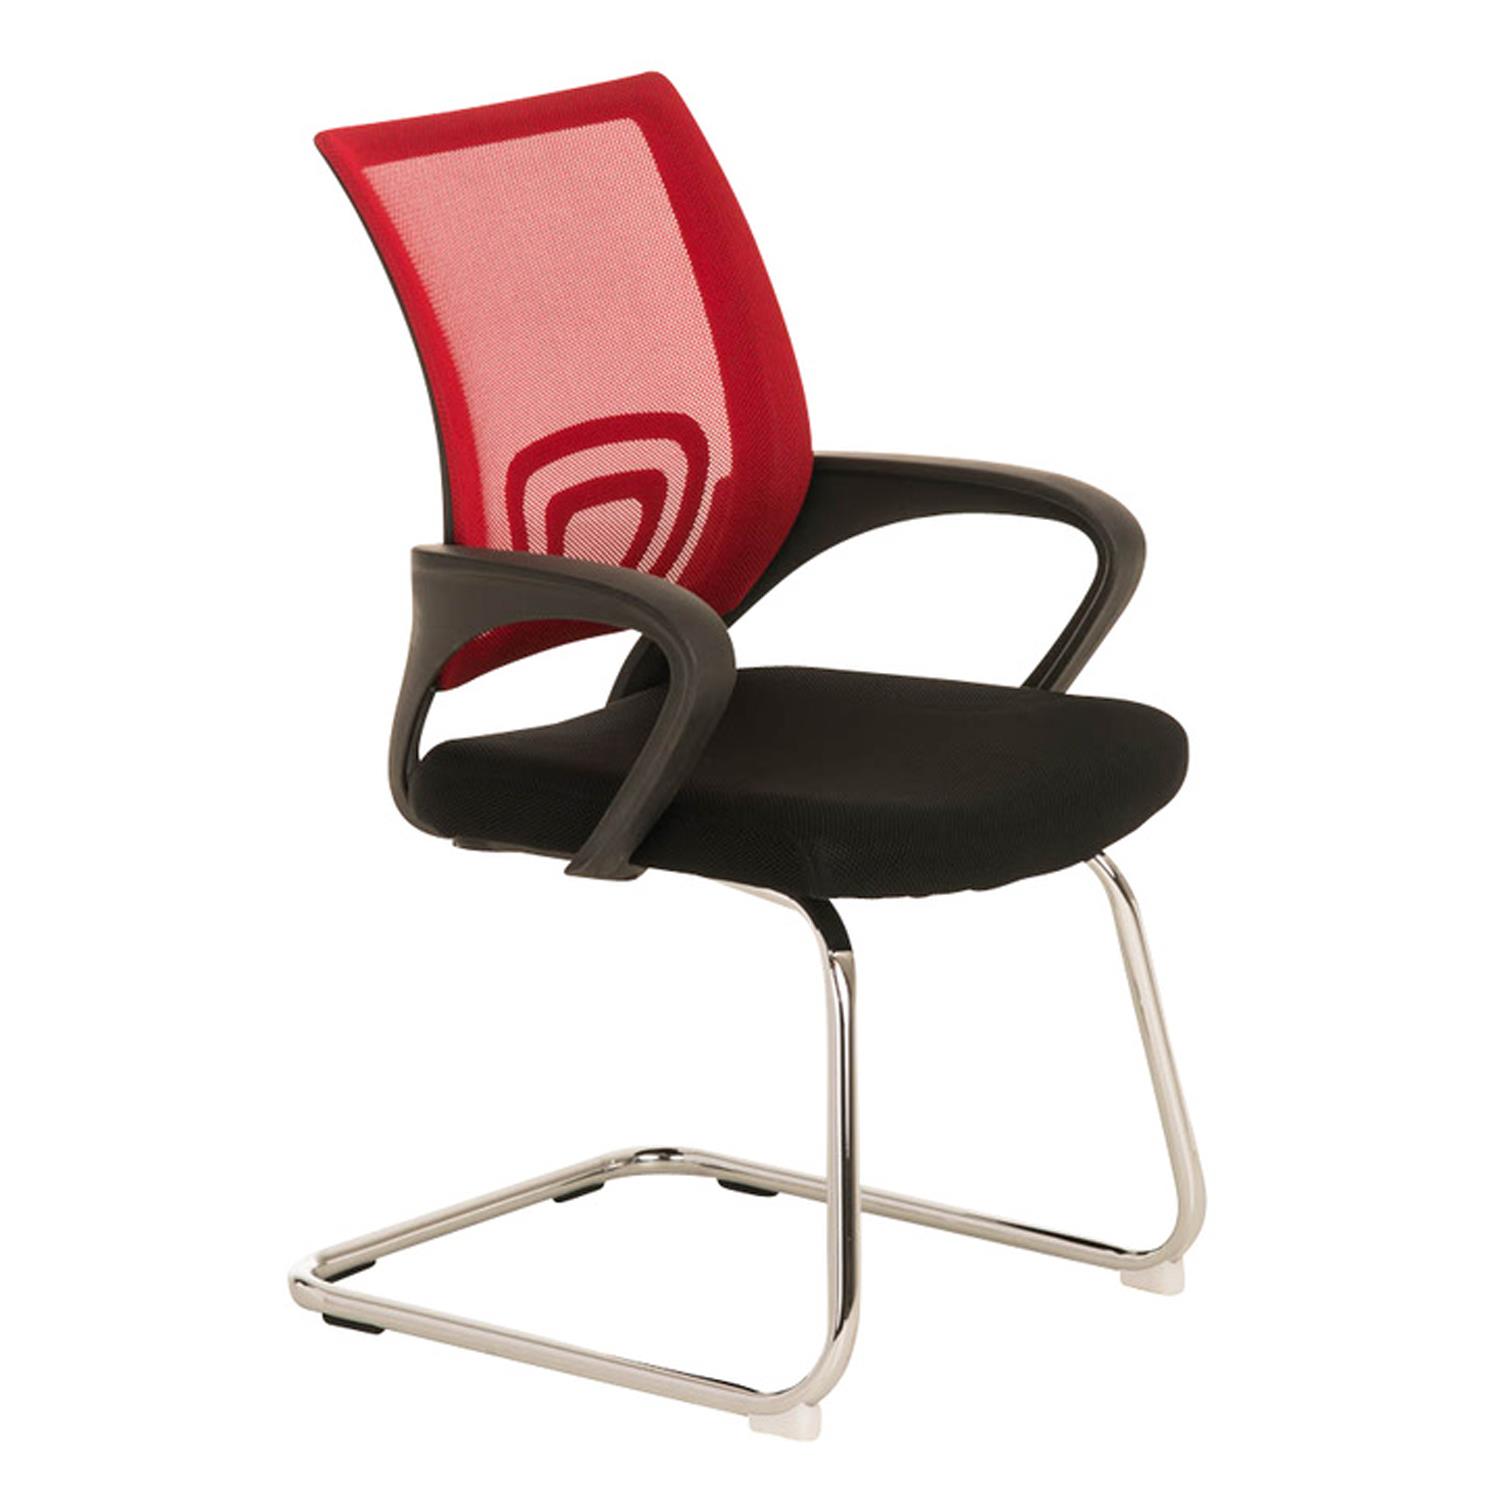 Konferenzstuhl SEOUL V, schönes Design, große gepolsterte Sitzfläche, Farbe Rot